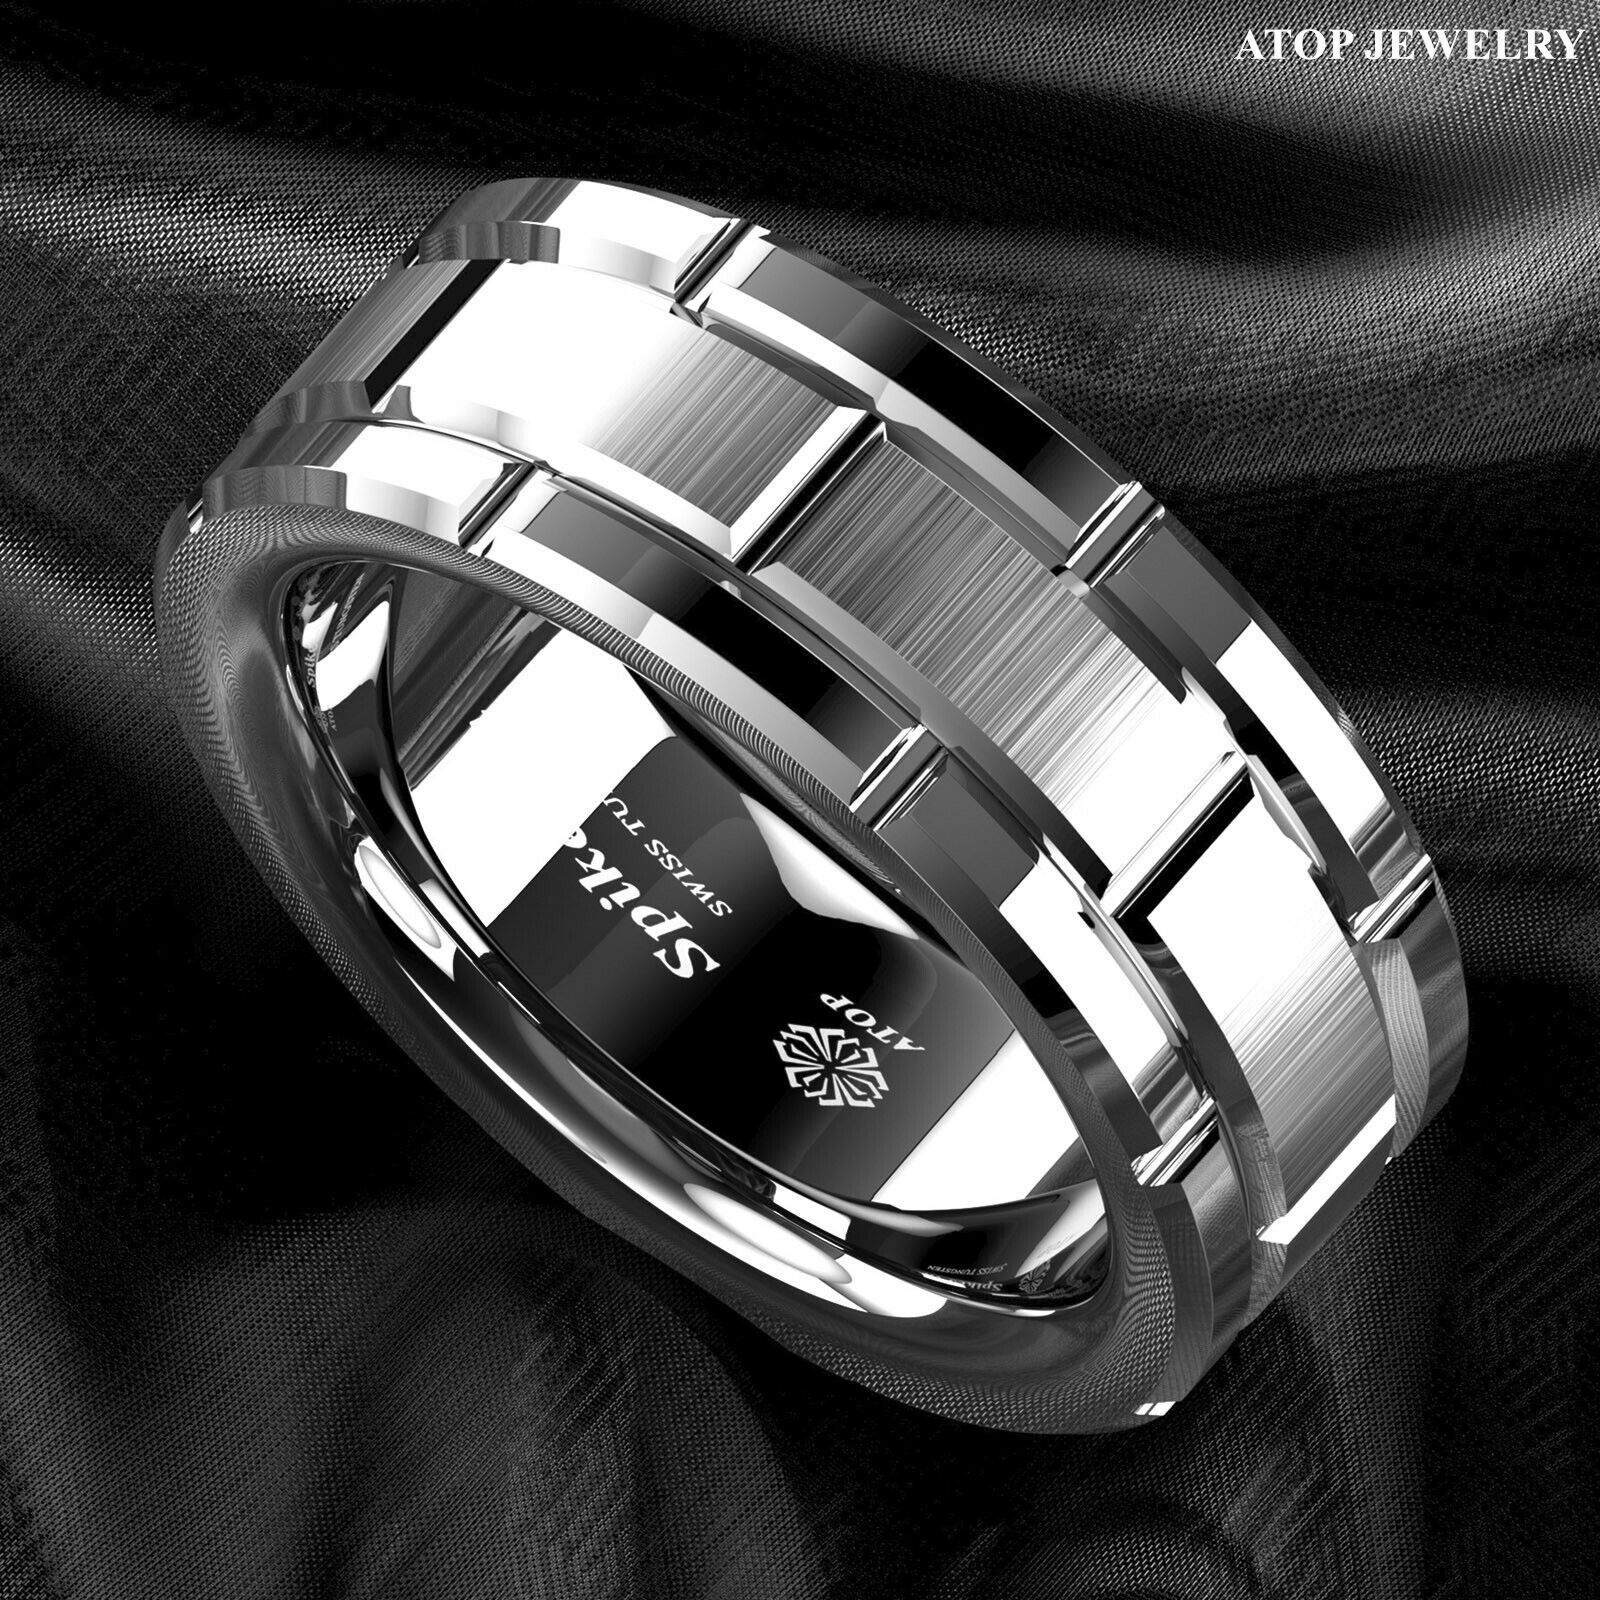 8mm Men's Tungsten Carbide Ring Silver Wedding Band Brick Pattern Size 6-13 Atop